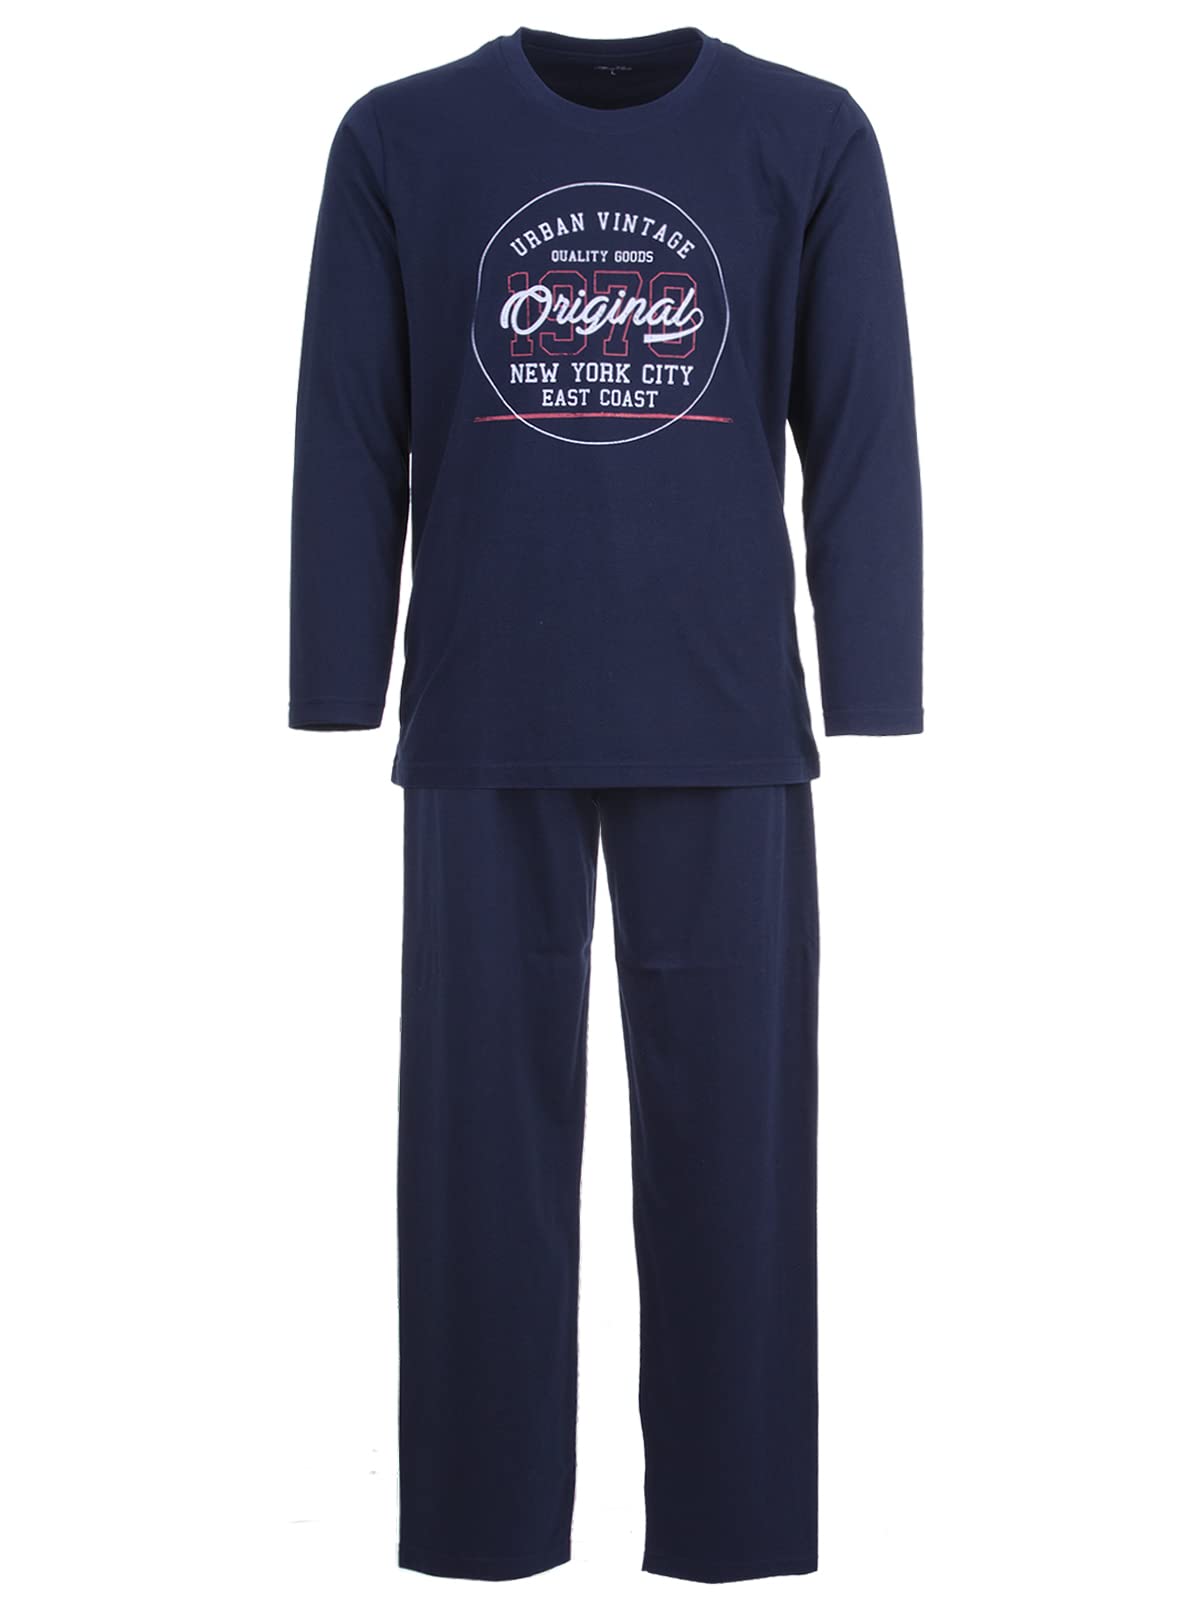 LUCKY Herren Pyjama lang Schlafanzug Pyjama Set Druck Motiv, Farbe:Navy, Größe:3XL